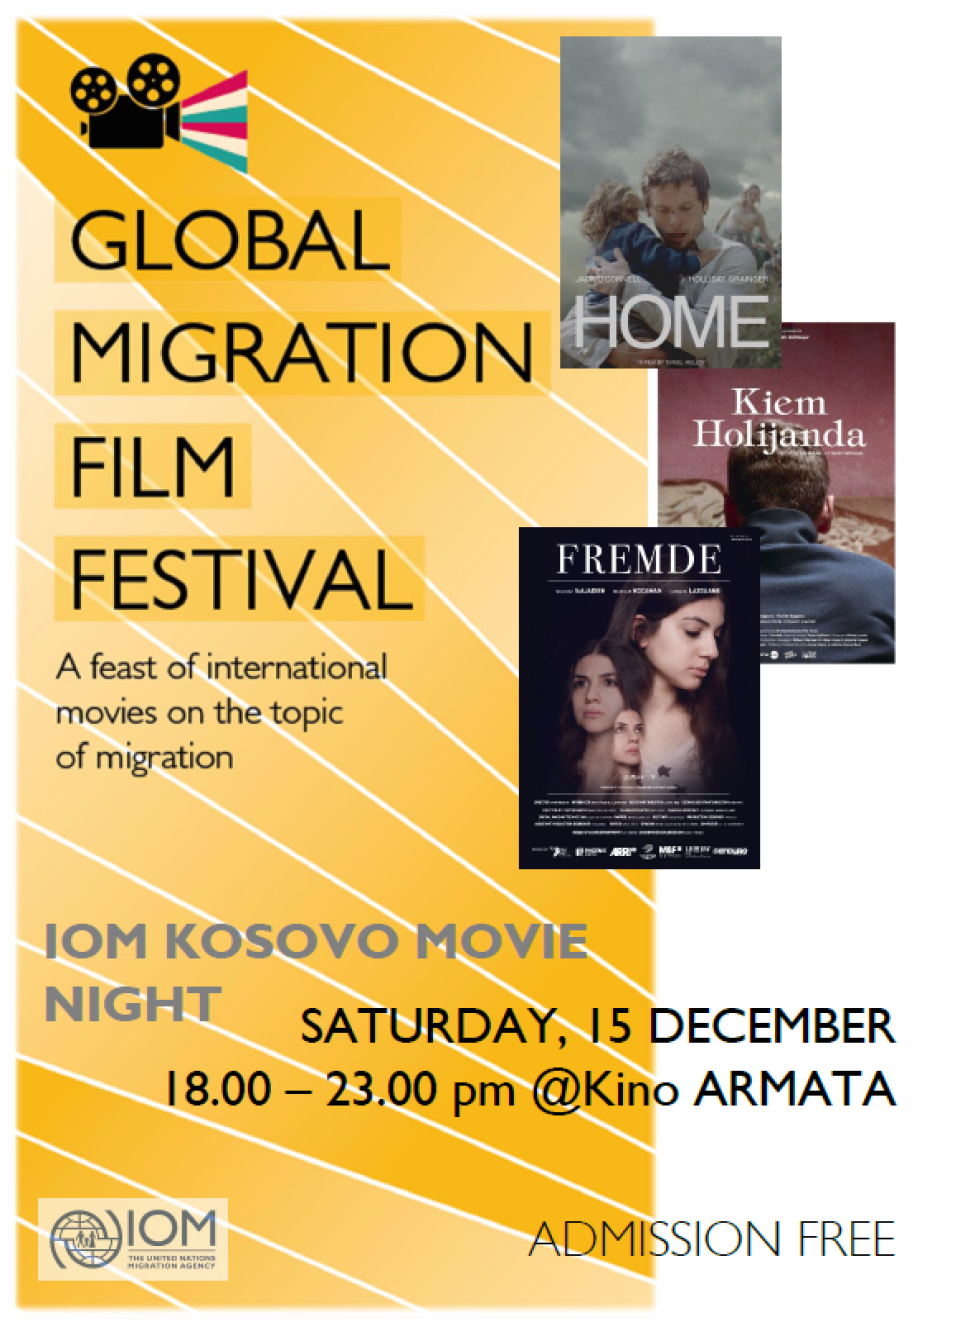 IOM Kosovo Movie Night in Pristina | Mission in Kosovo